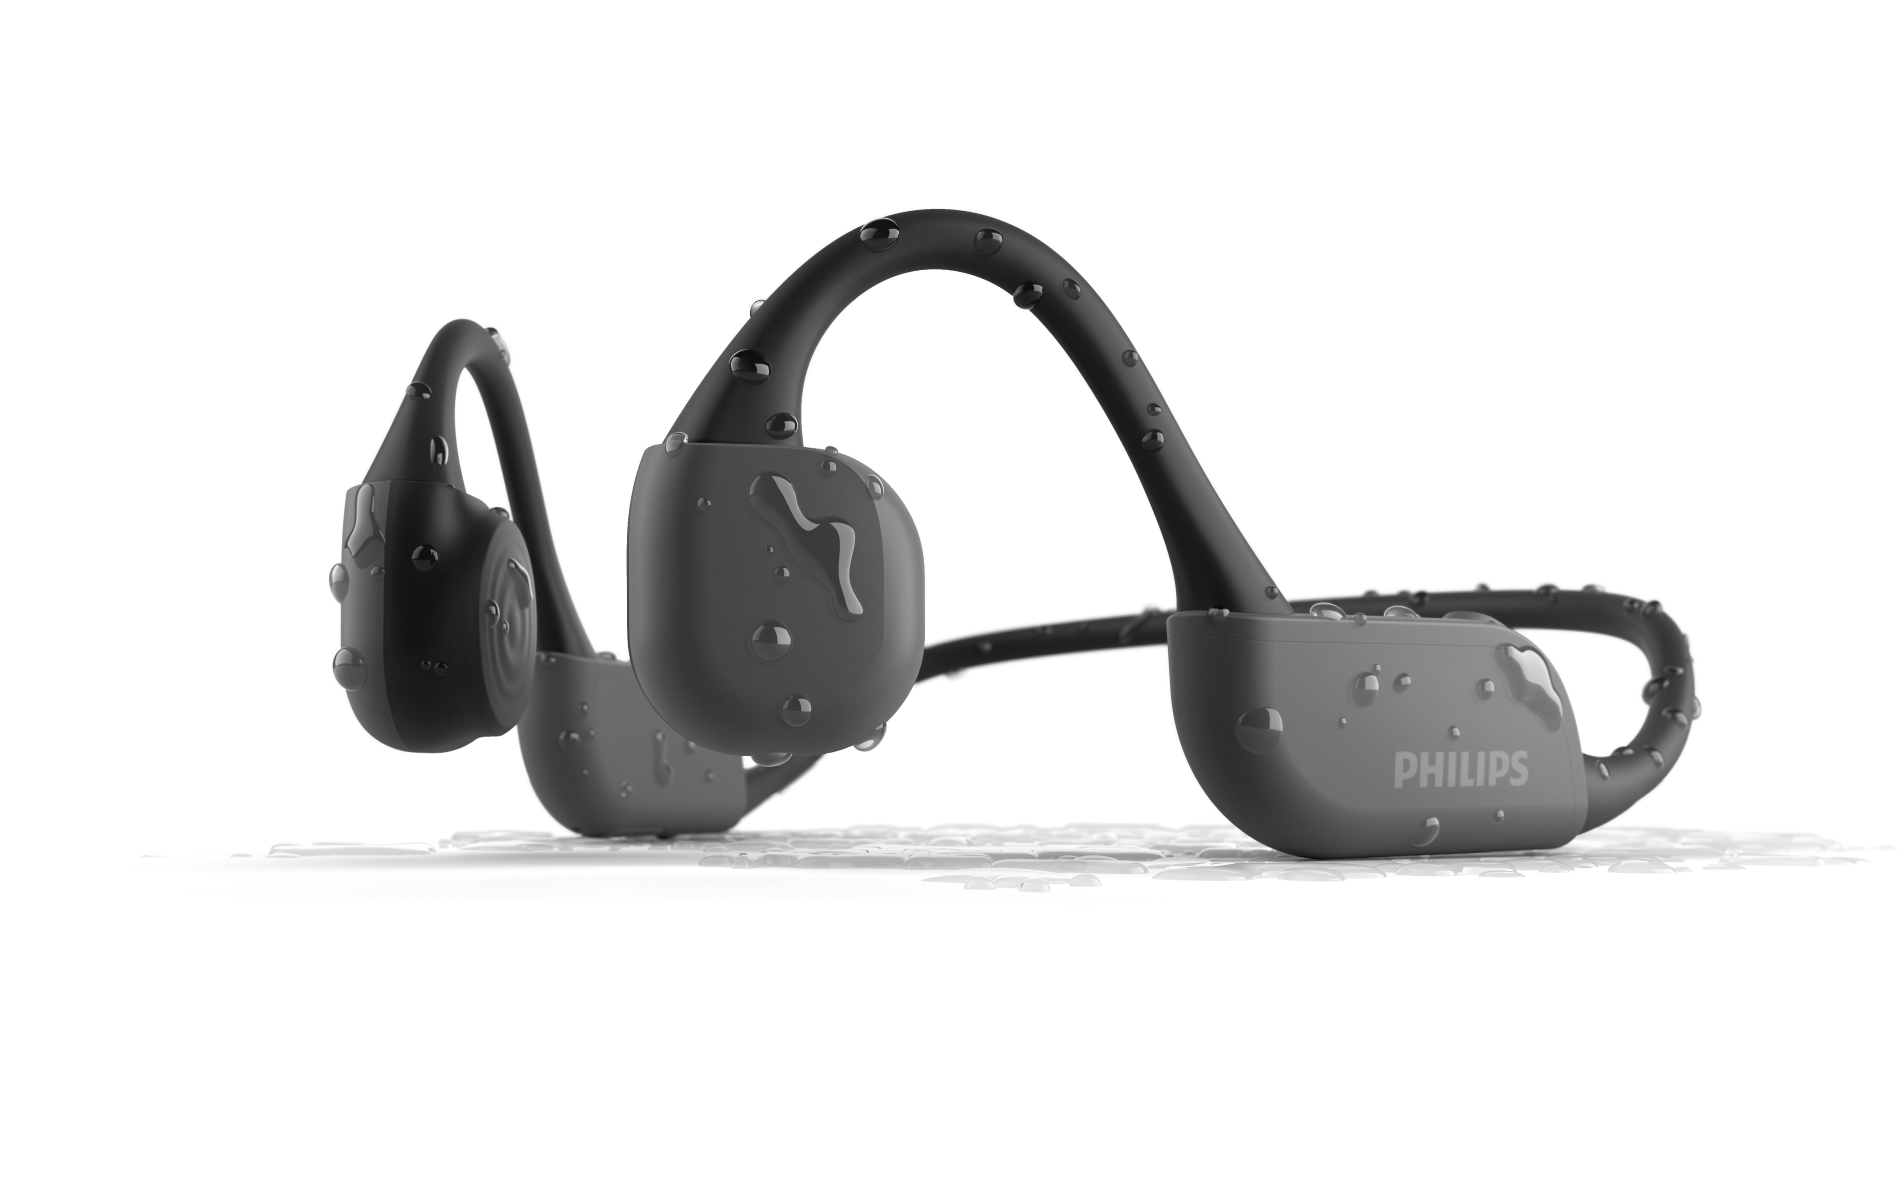 Picture of Philips Bone Conducting Headphones